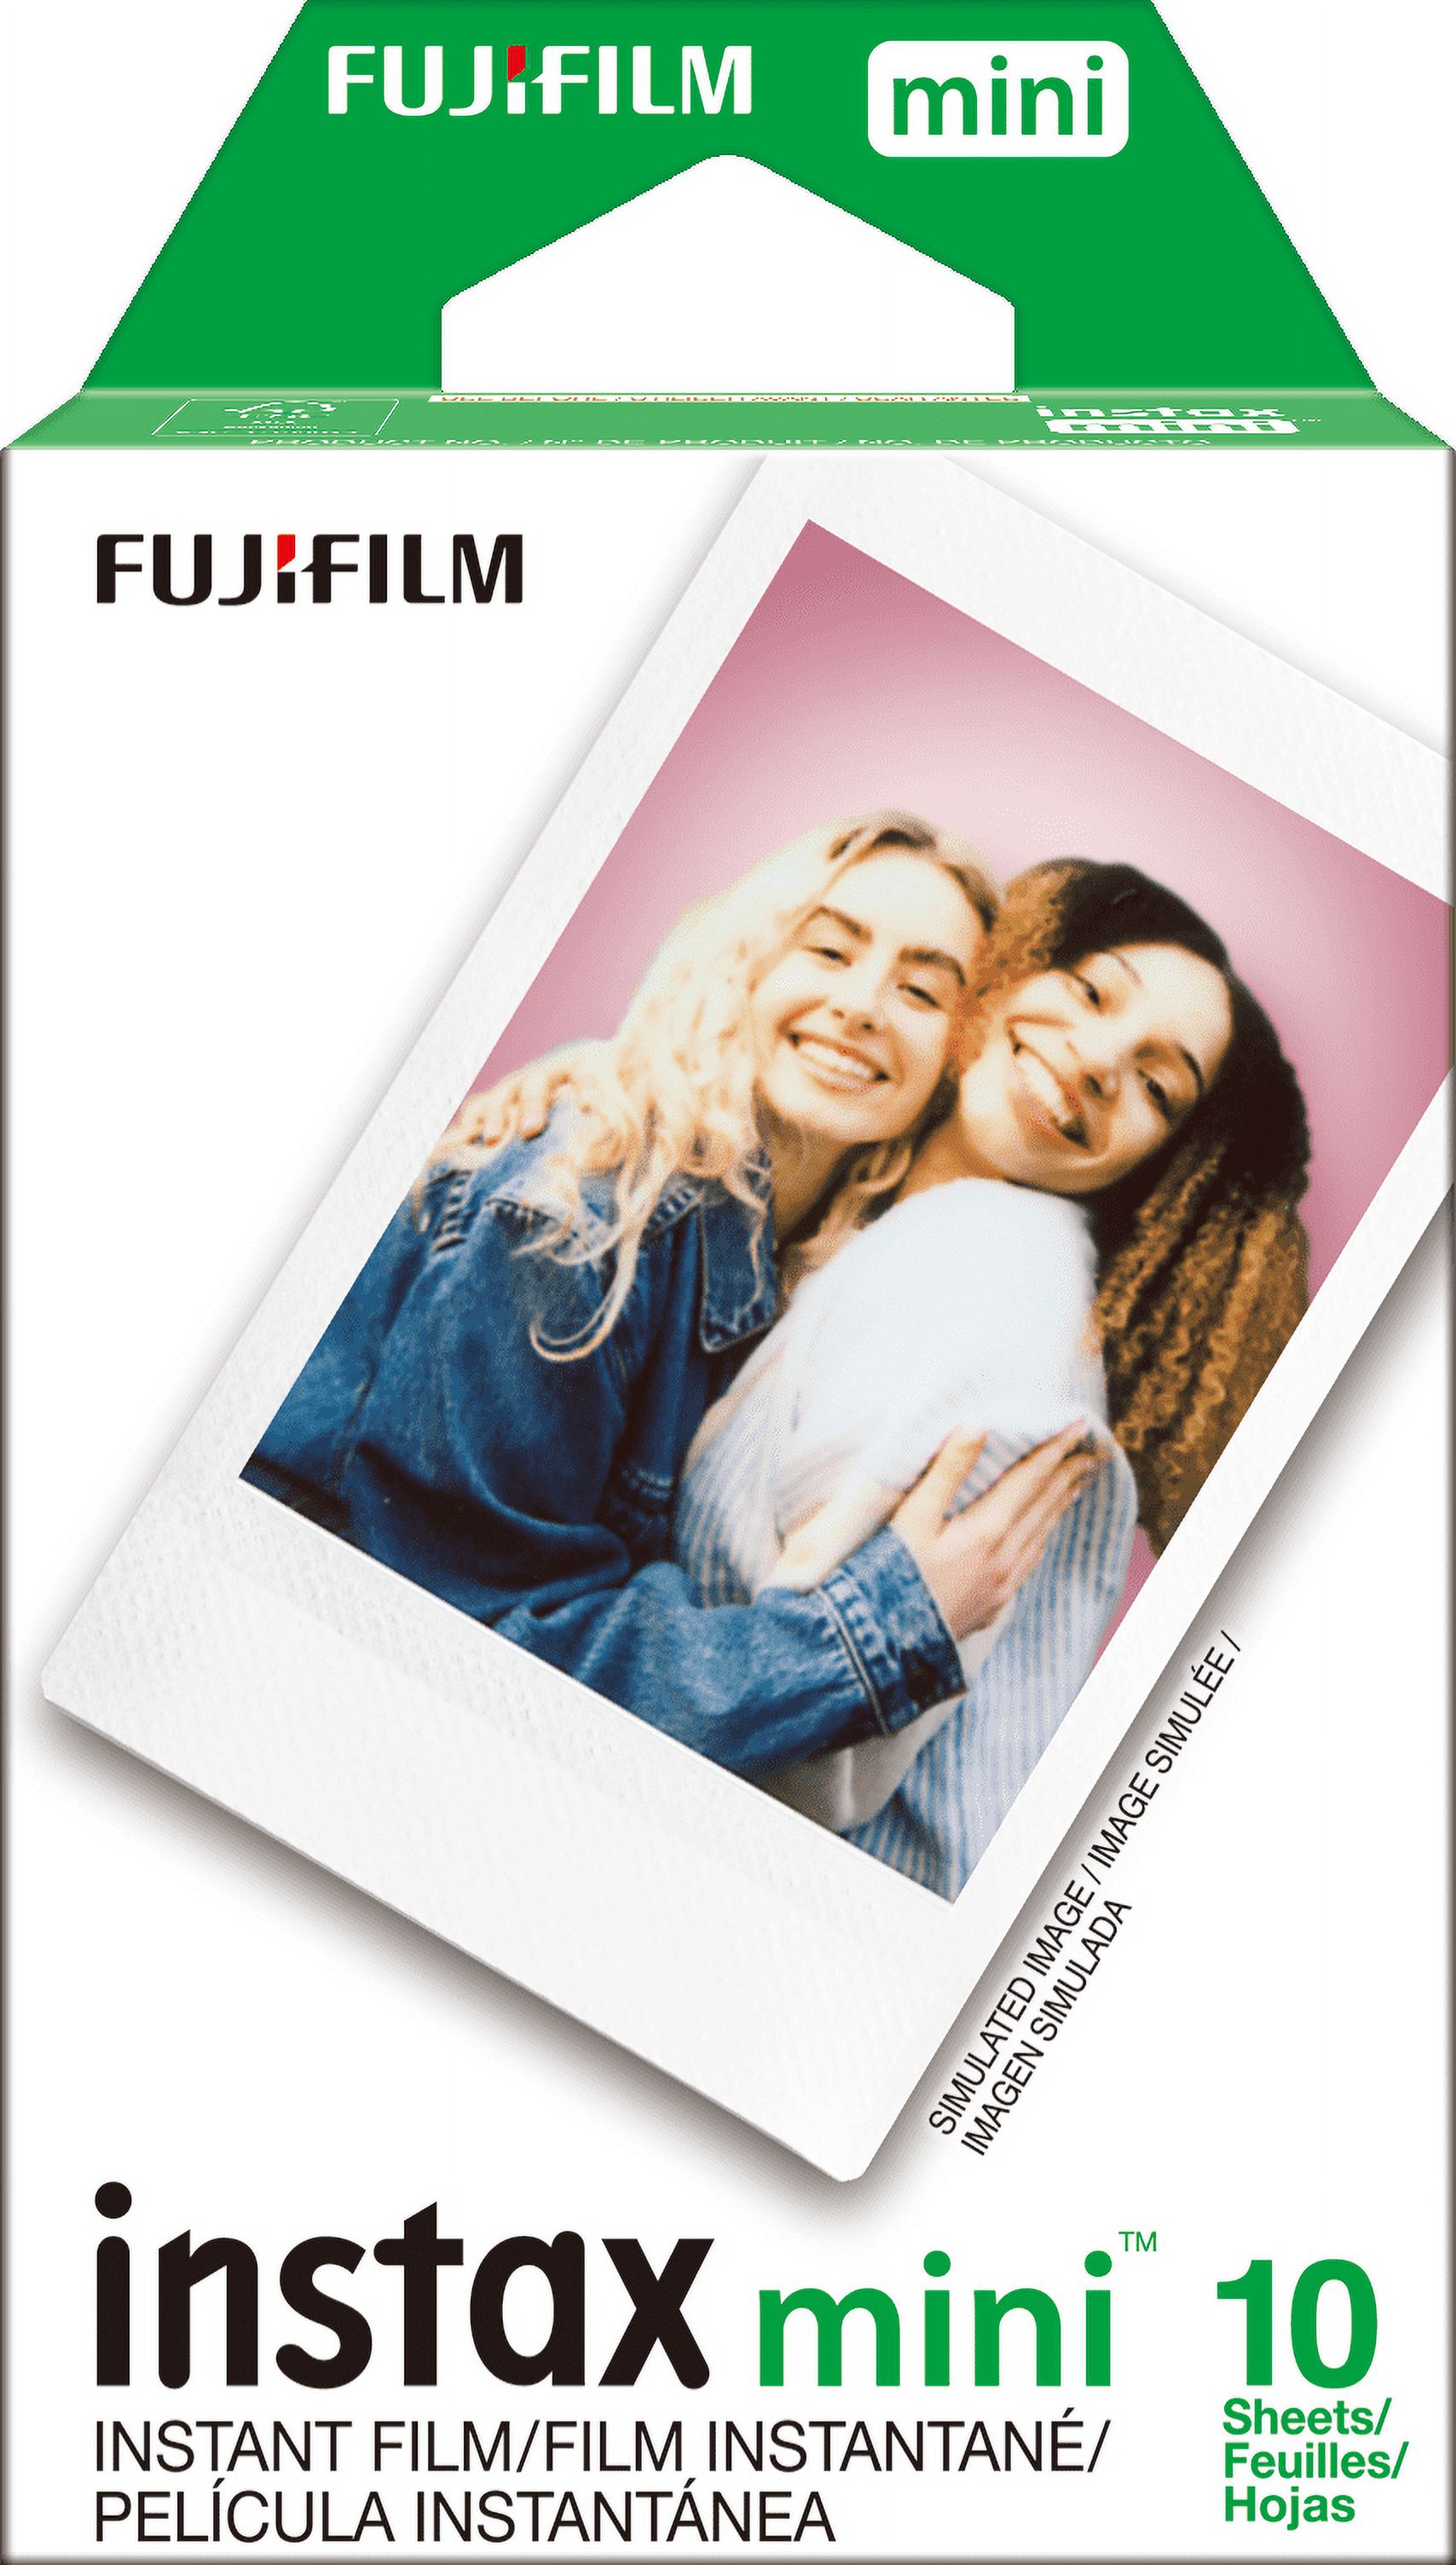 Fujifilm INSTAX Mini 7+ Exclusive Blister Bundle with Bonus Pack of Film (10-pack Mini Film), Gray - image 4 of 8